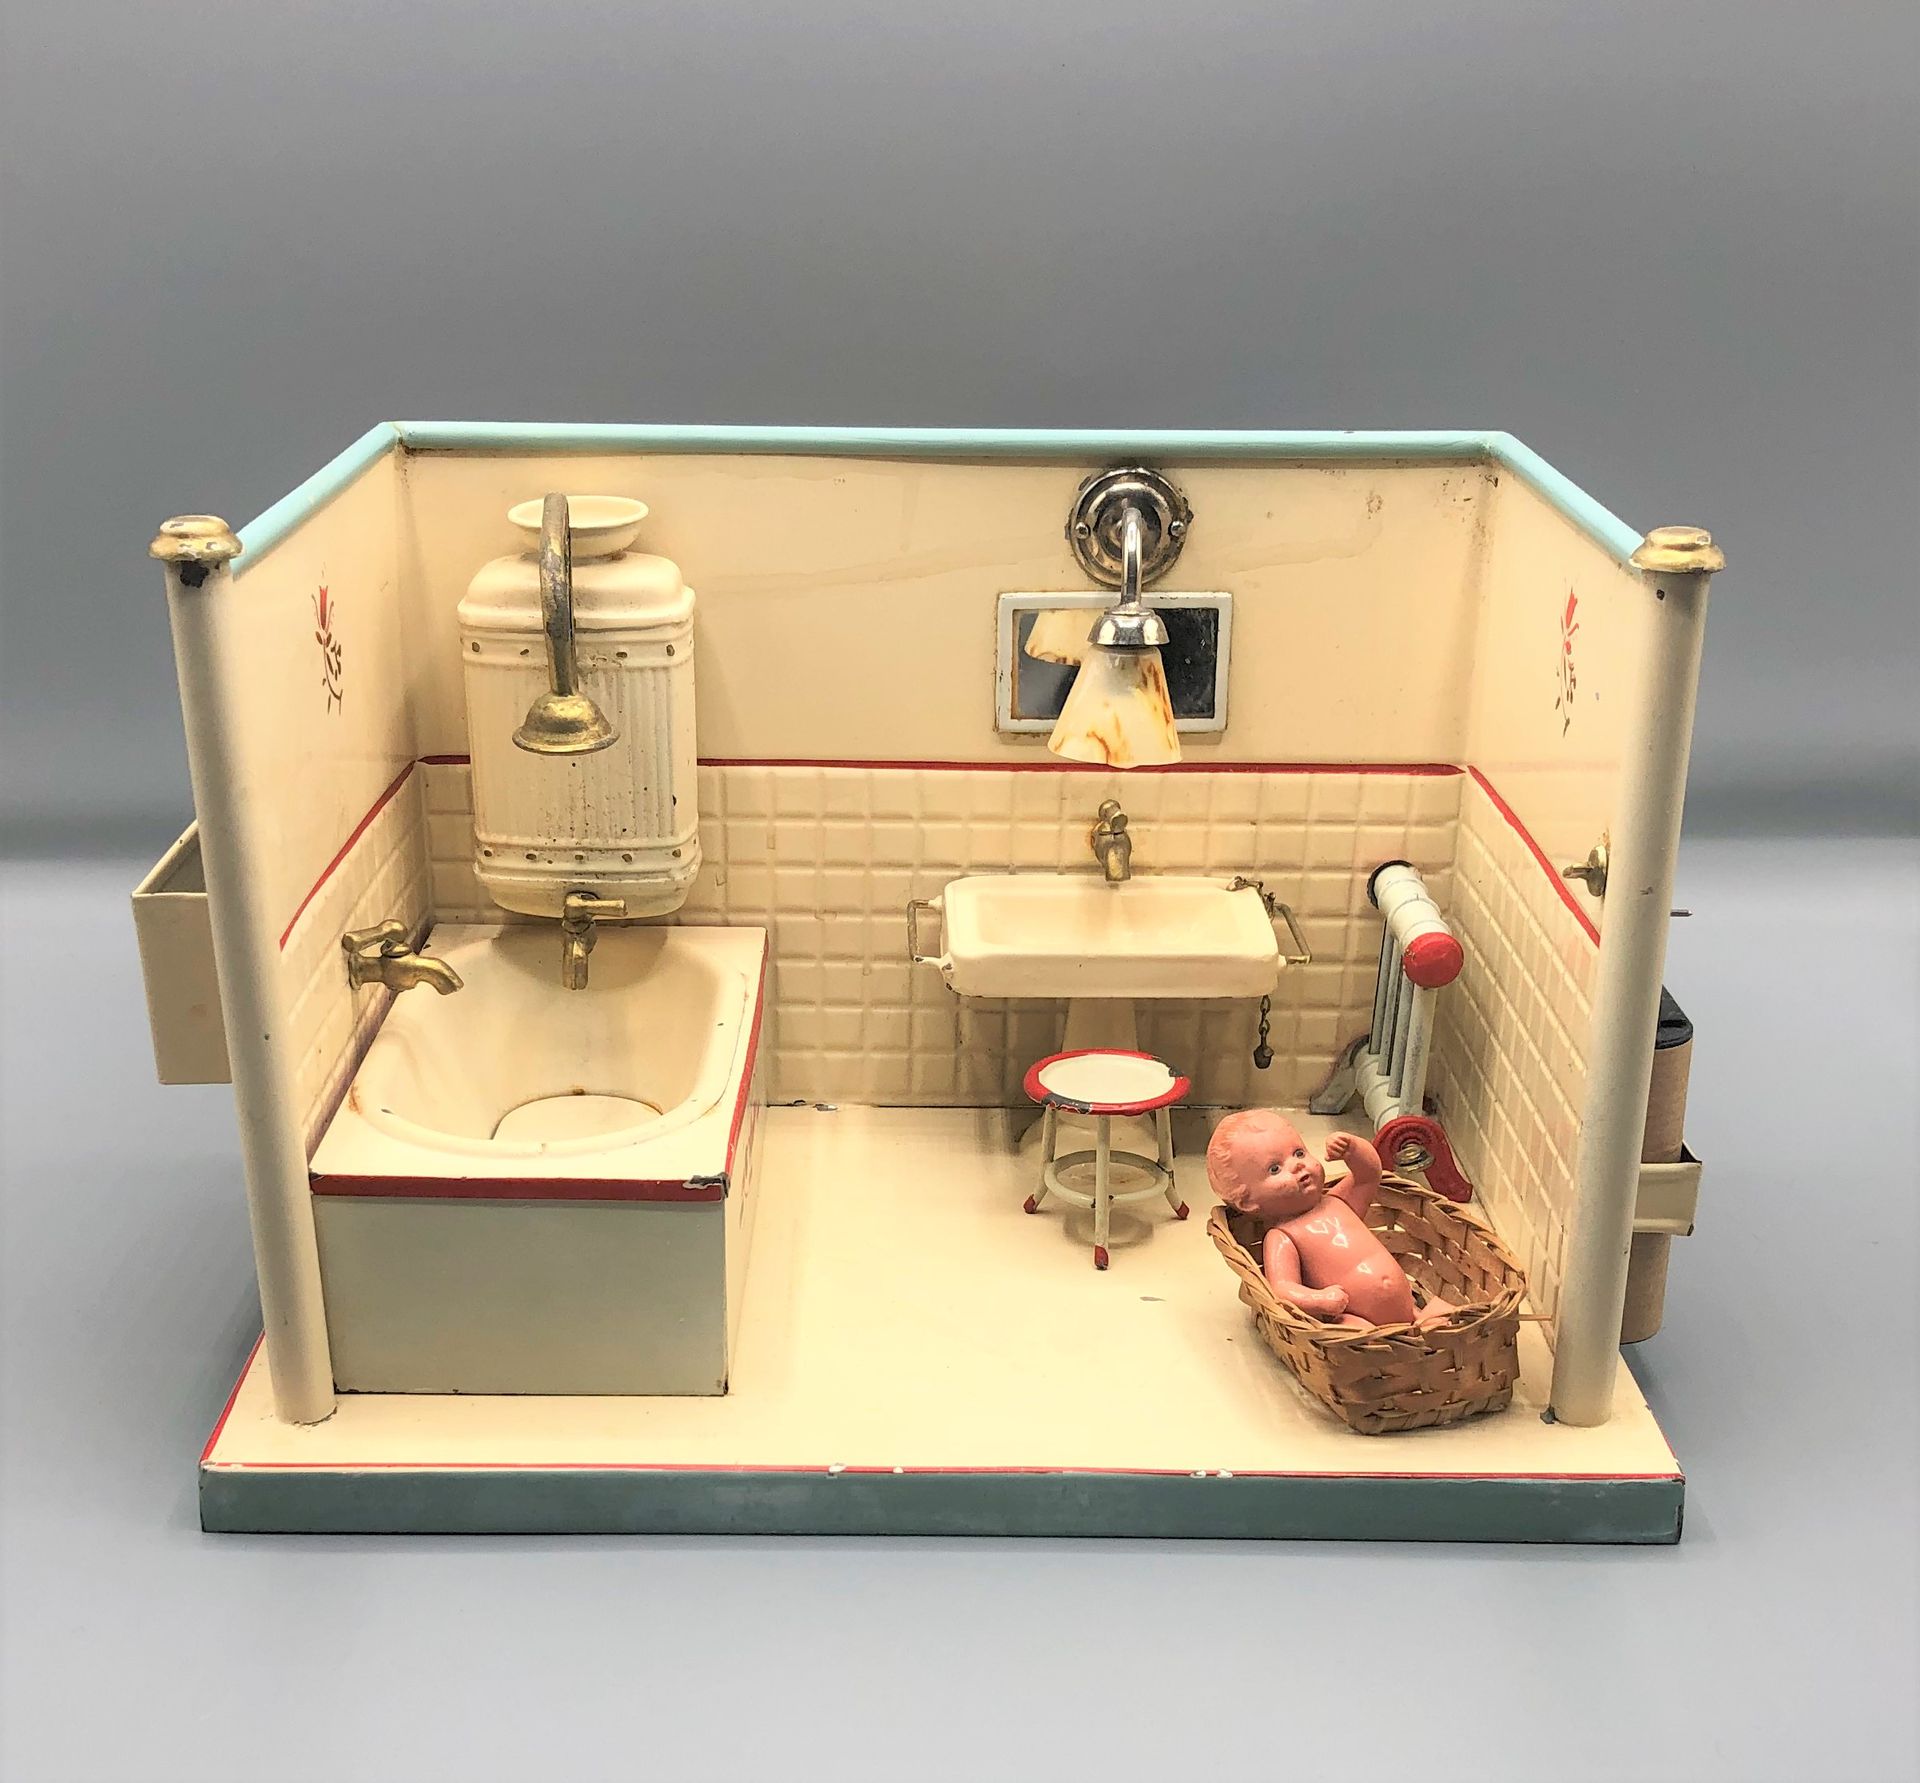 Null Model of art deco bathroom with bathtub, sink, shower. Each unit has its ow&hellip;